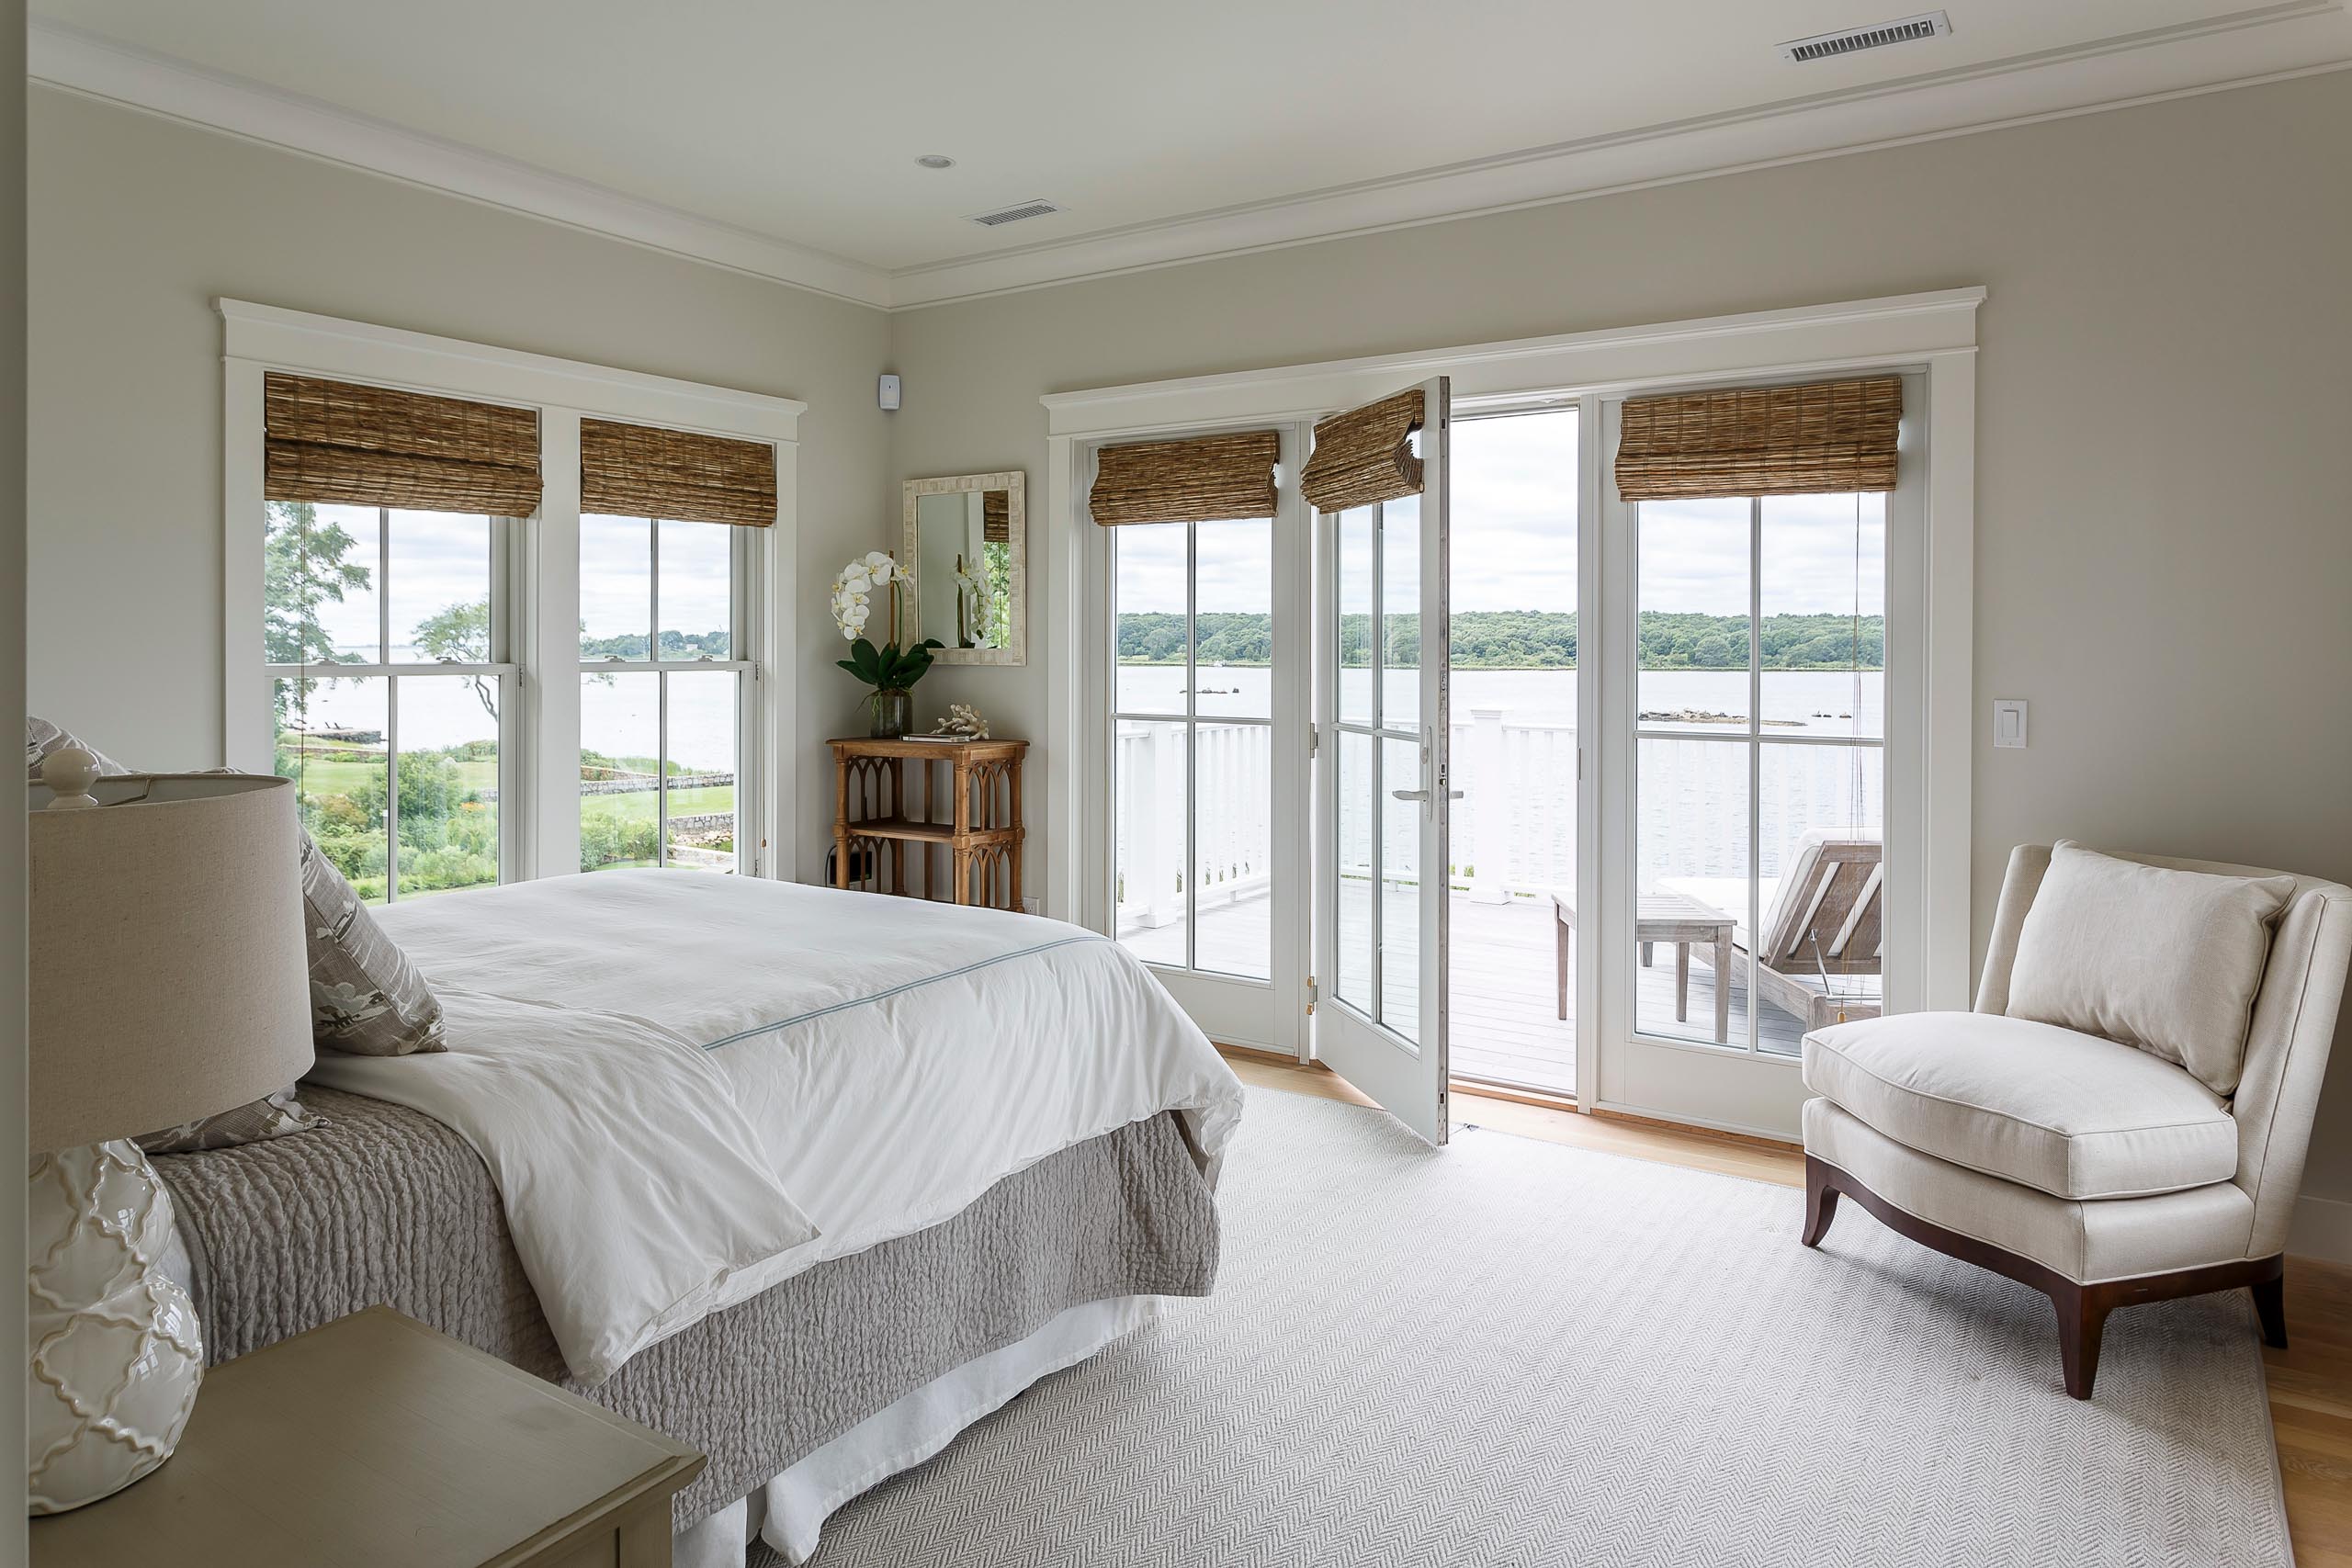 Sunset Cove bedroom with an open veranda.